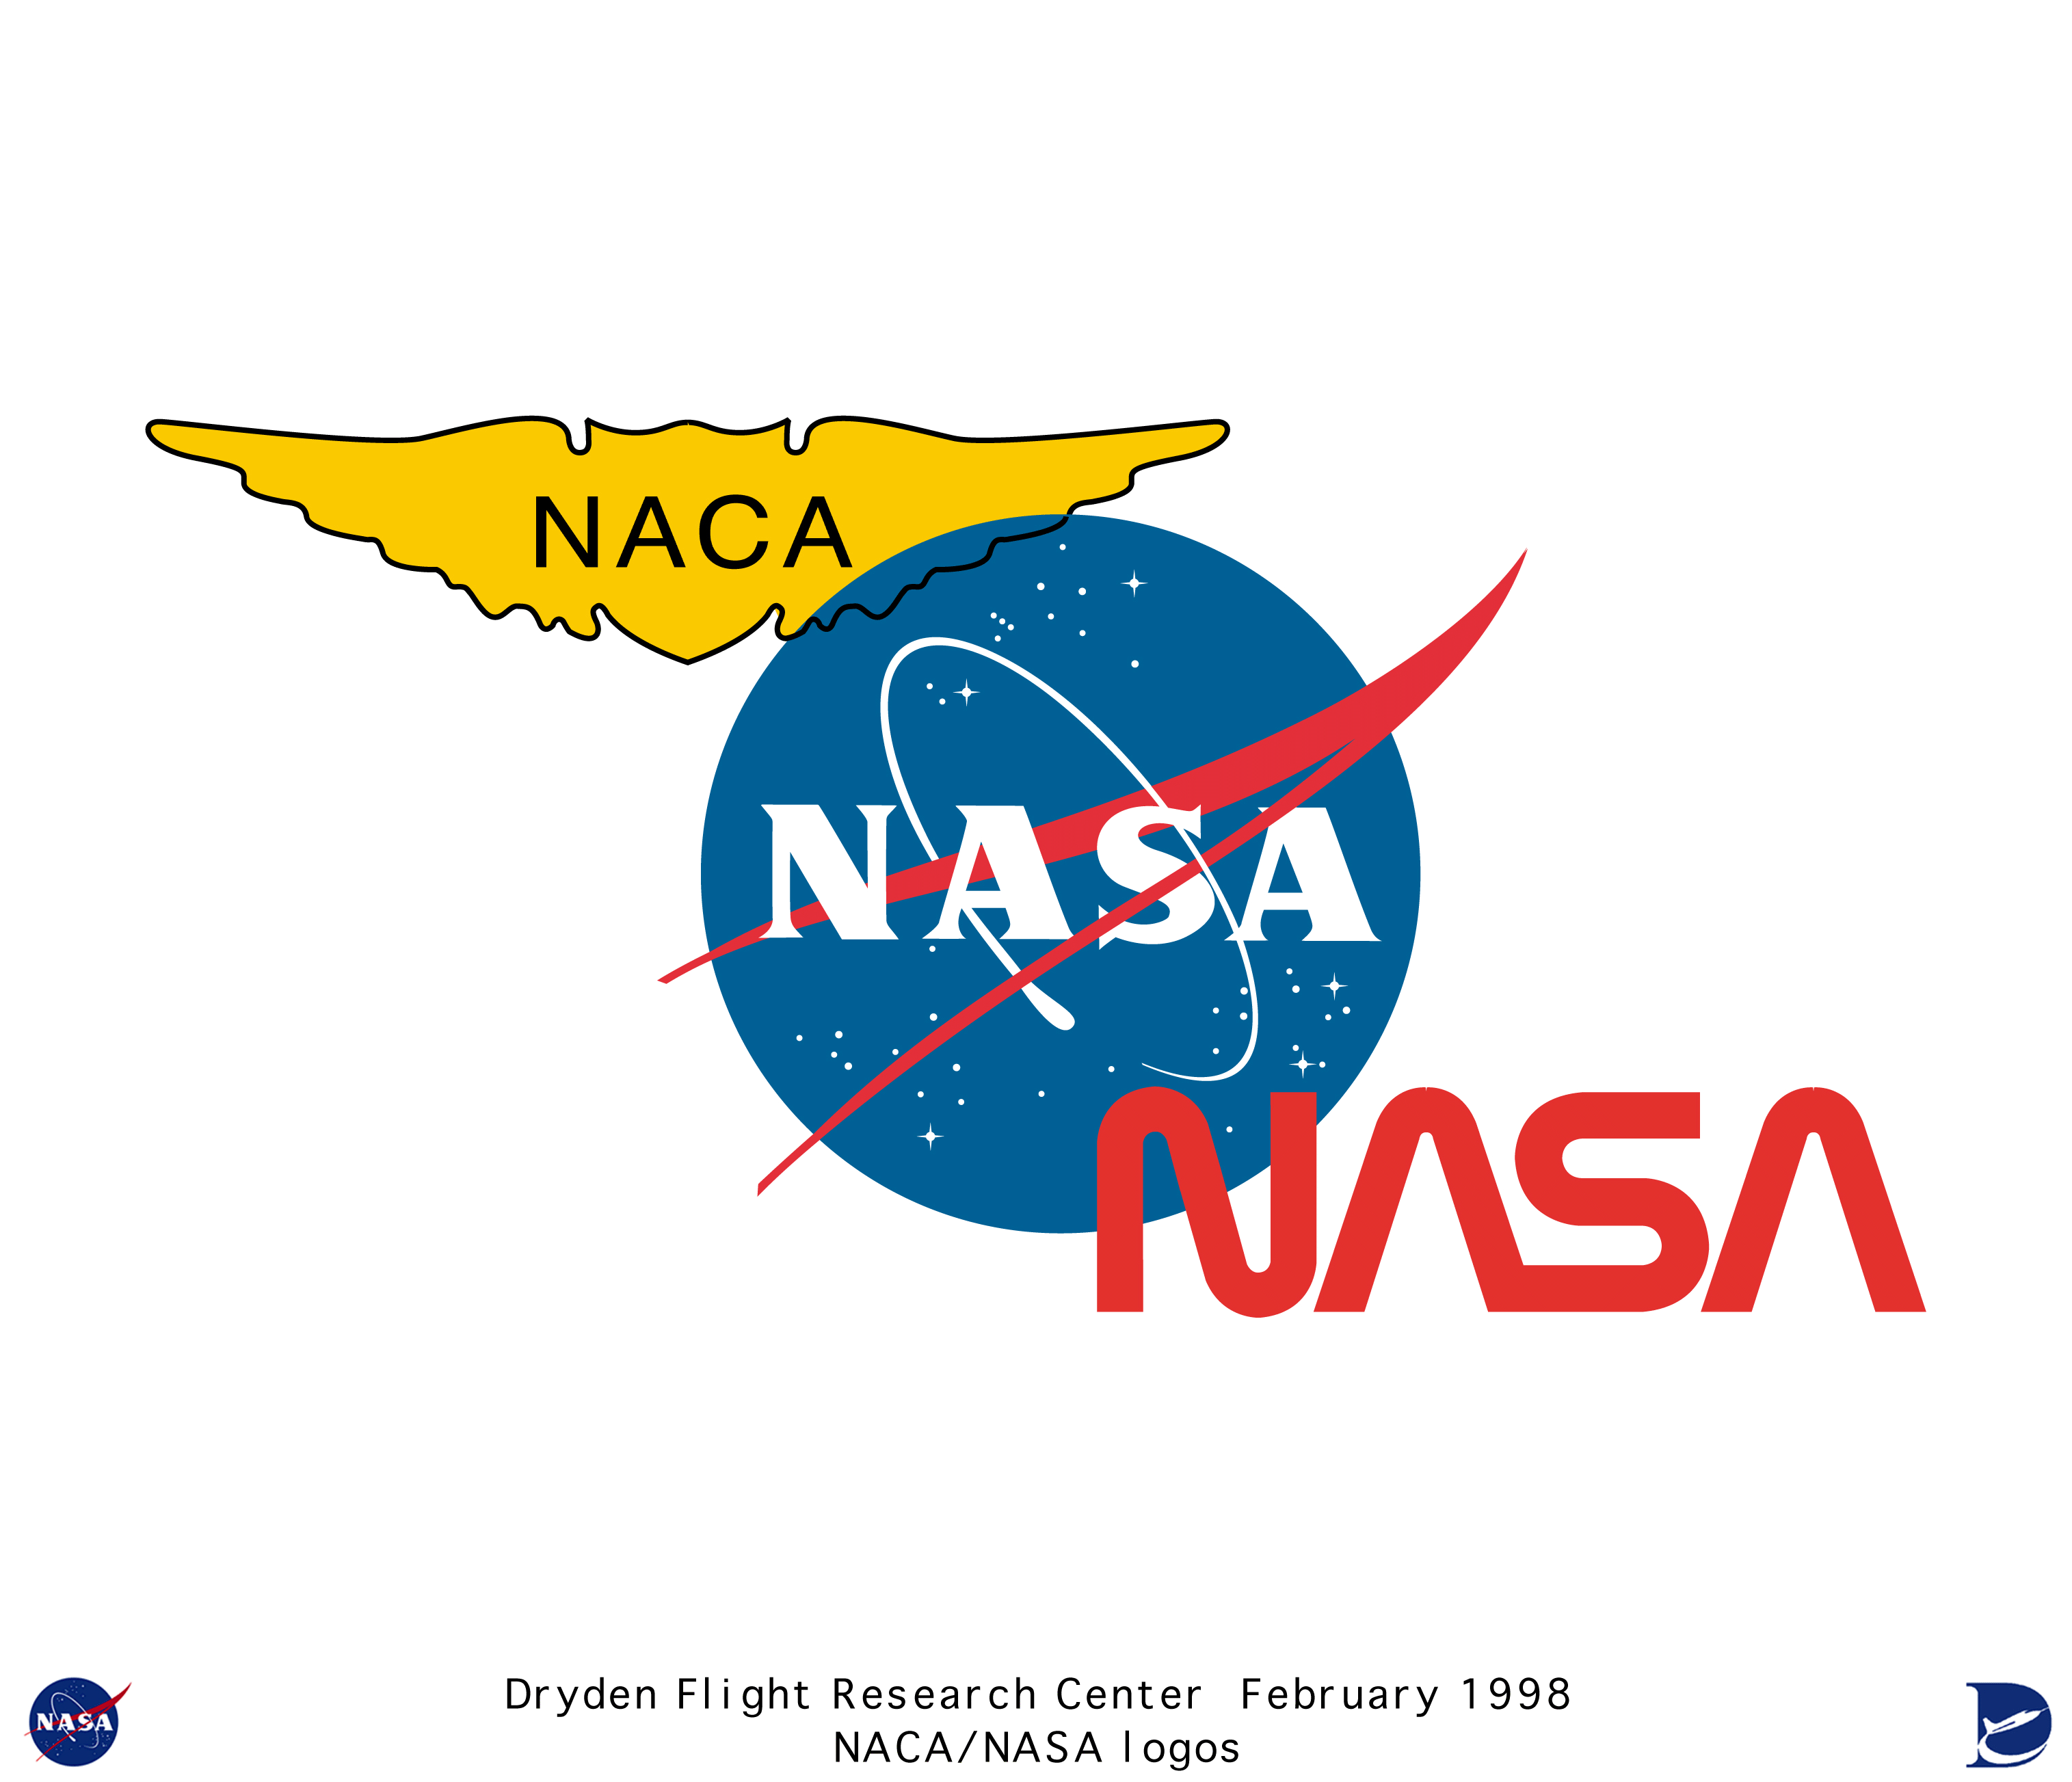 NACA Member Logo - Logos color_tri-logo: Color tri-logo (NACA, 2 NASA insignia)